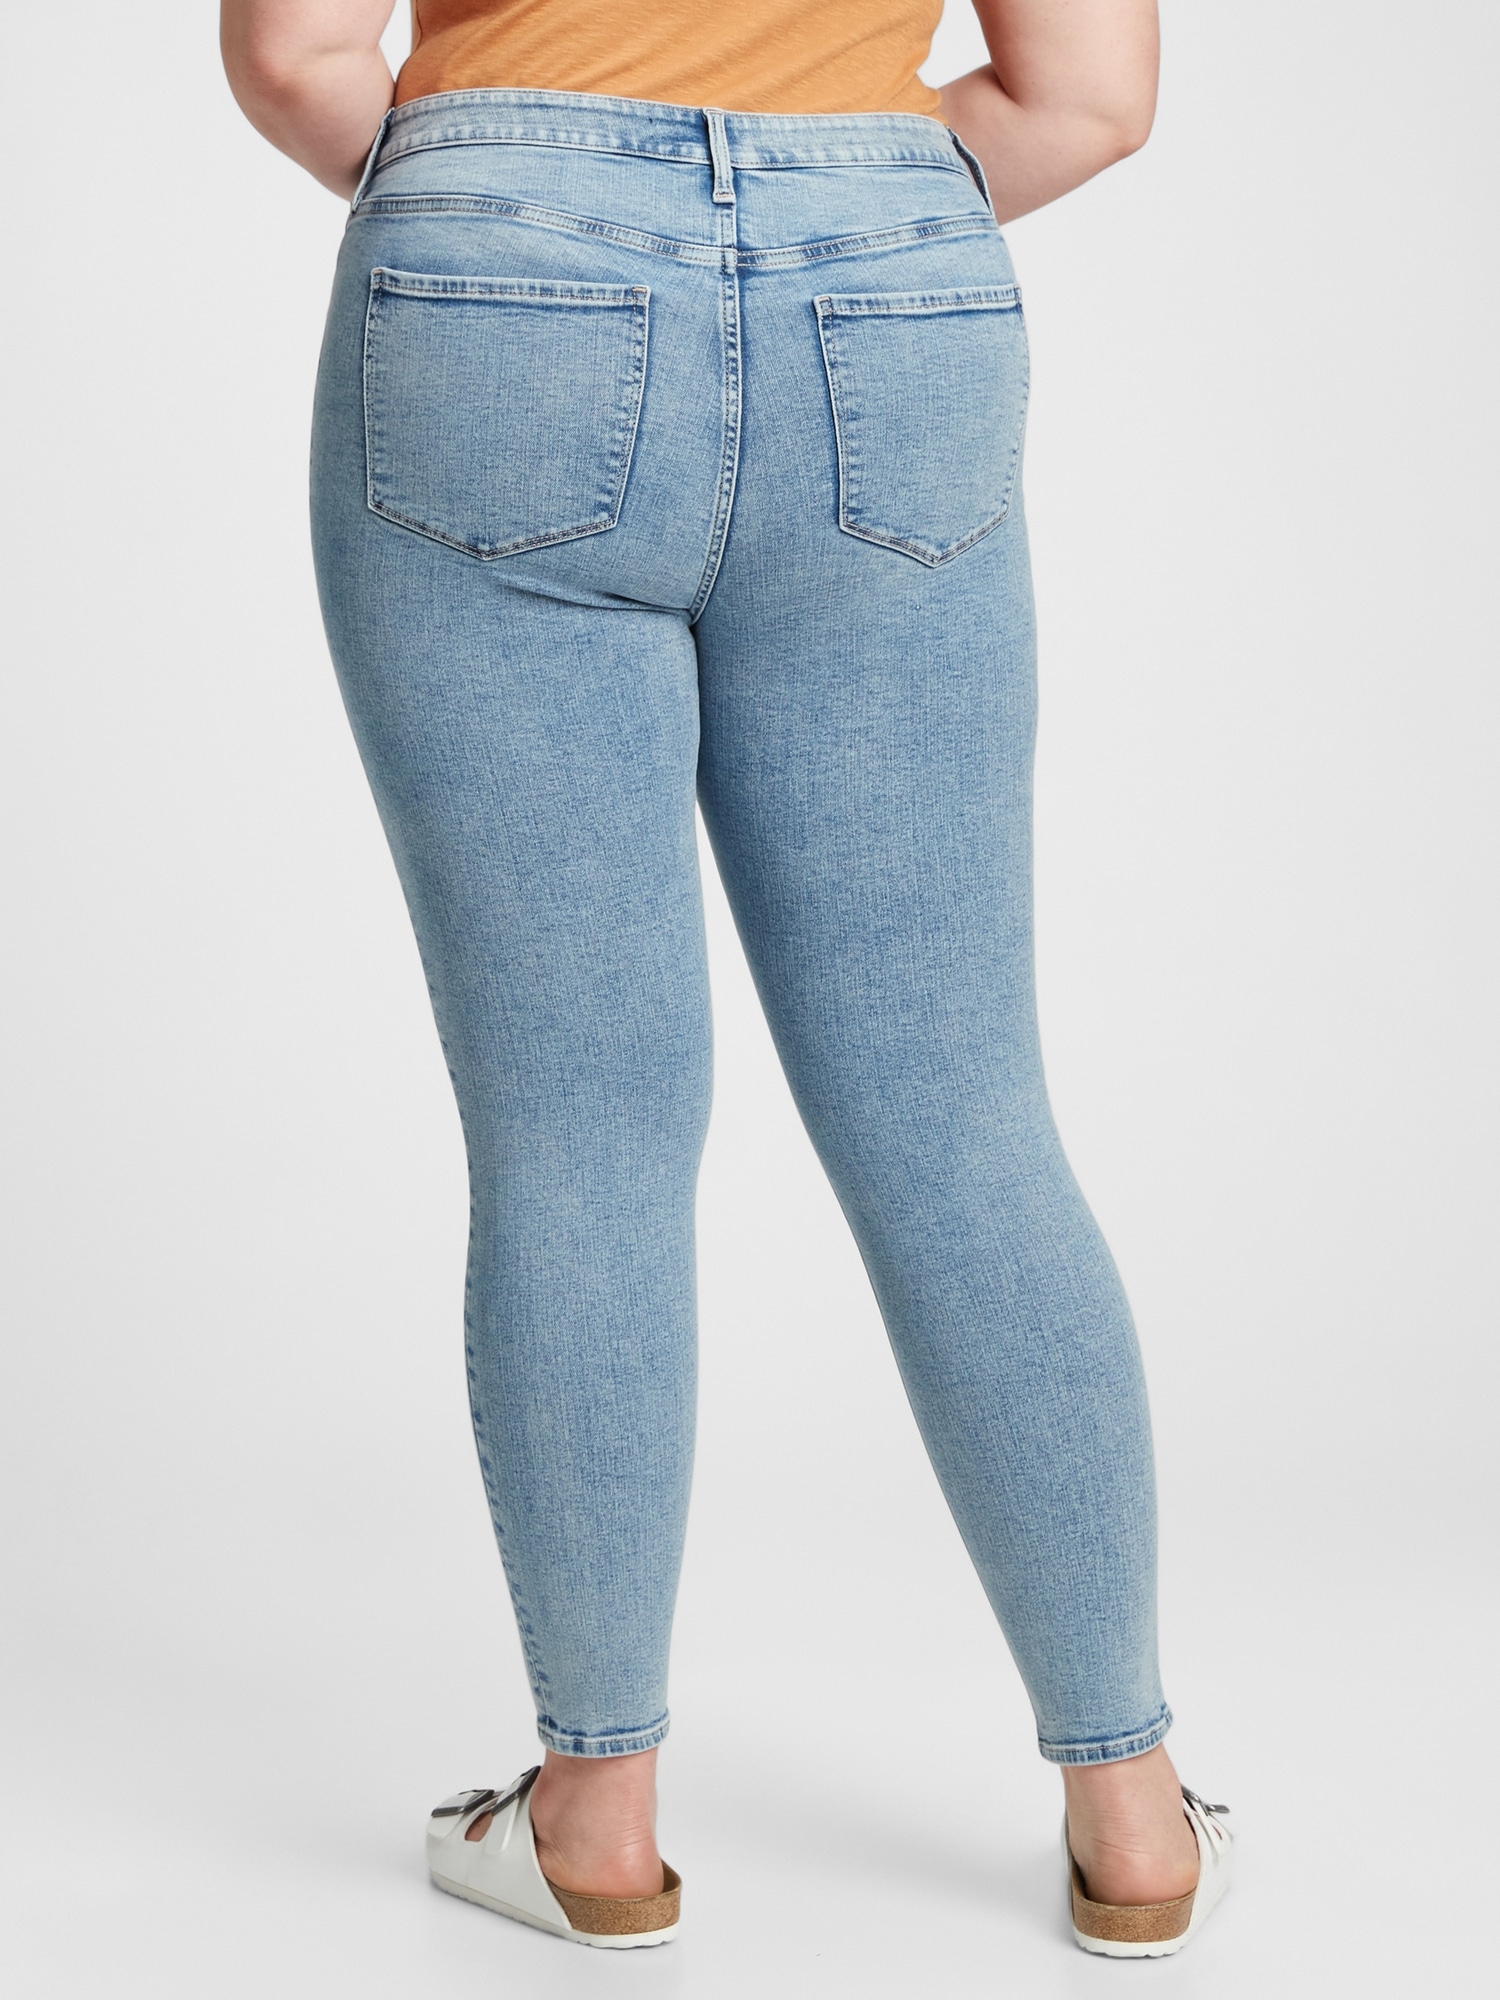 Men Helt tør fiktiv High Rise Universal Legging Jeans with Washwell | Gap Factory